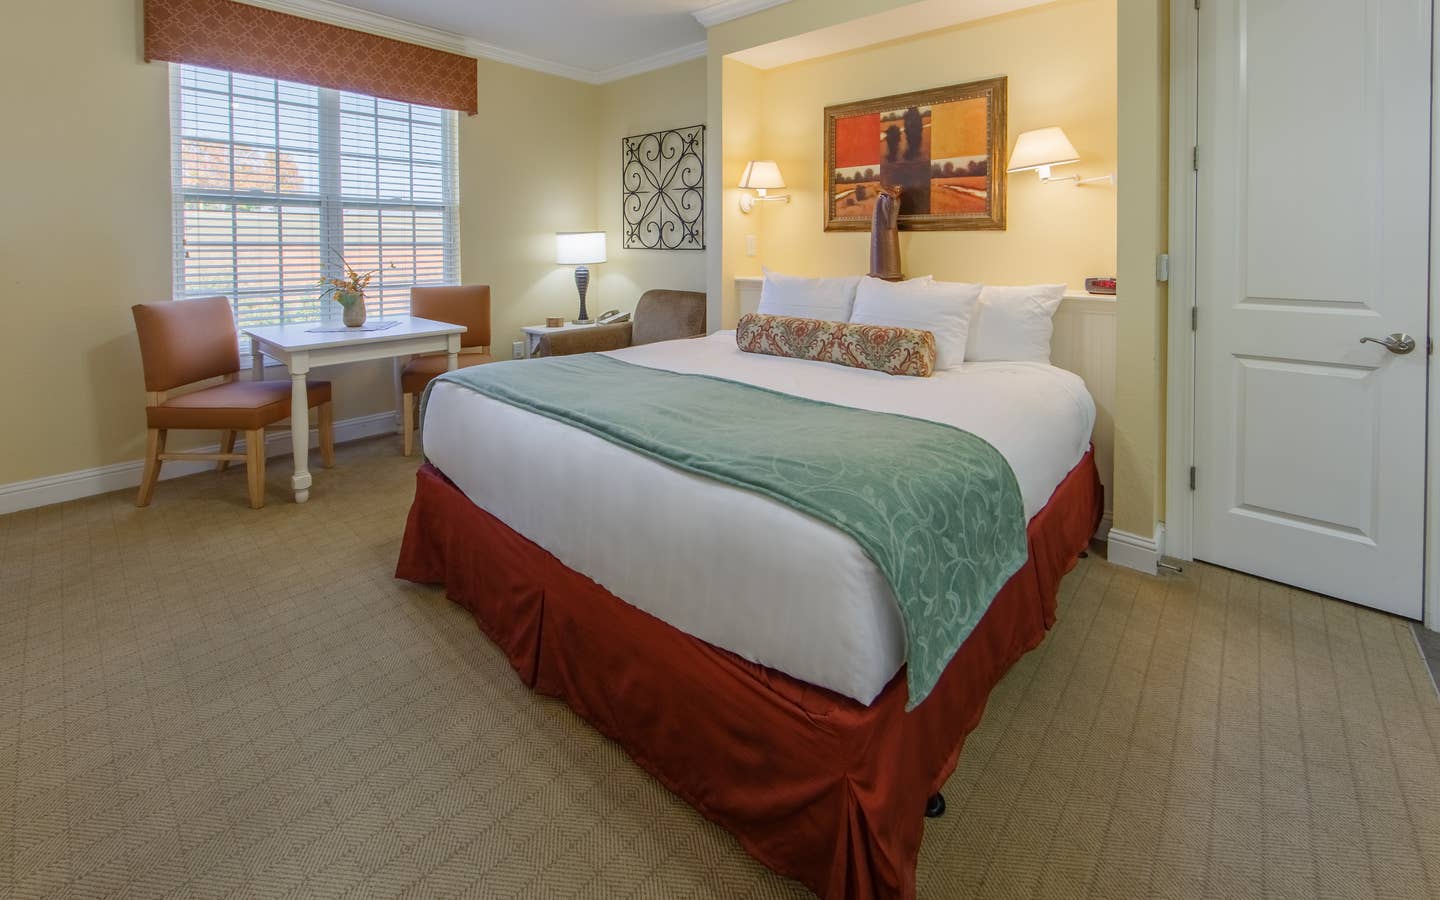 Bedroom in a two-bedroom presidential villa at Apple Mountain Resort in Clarkesville, GA